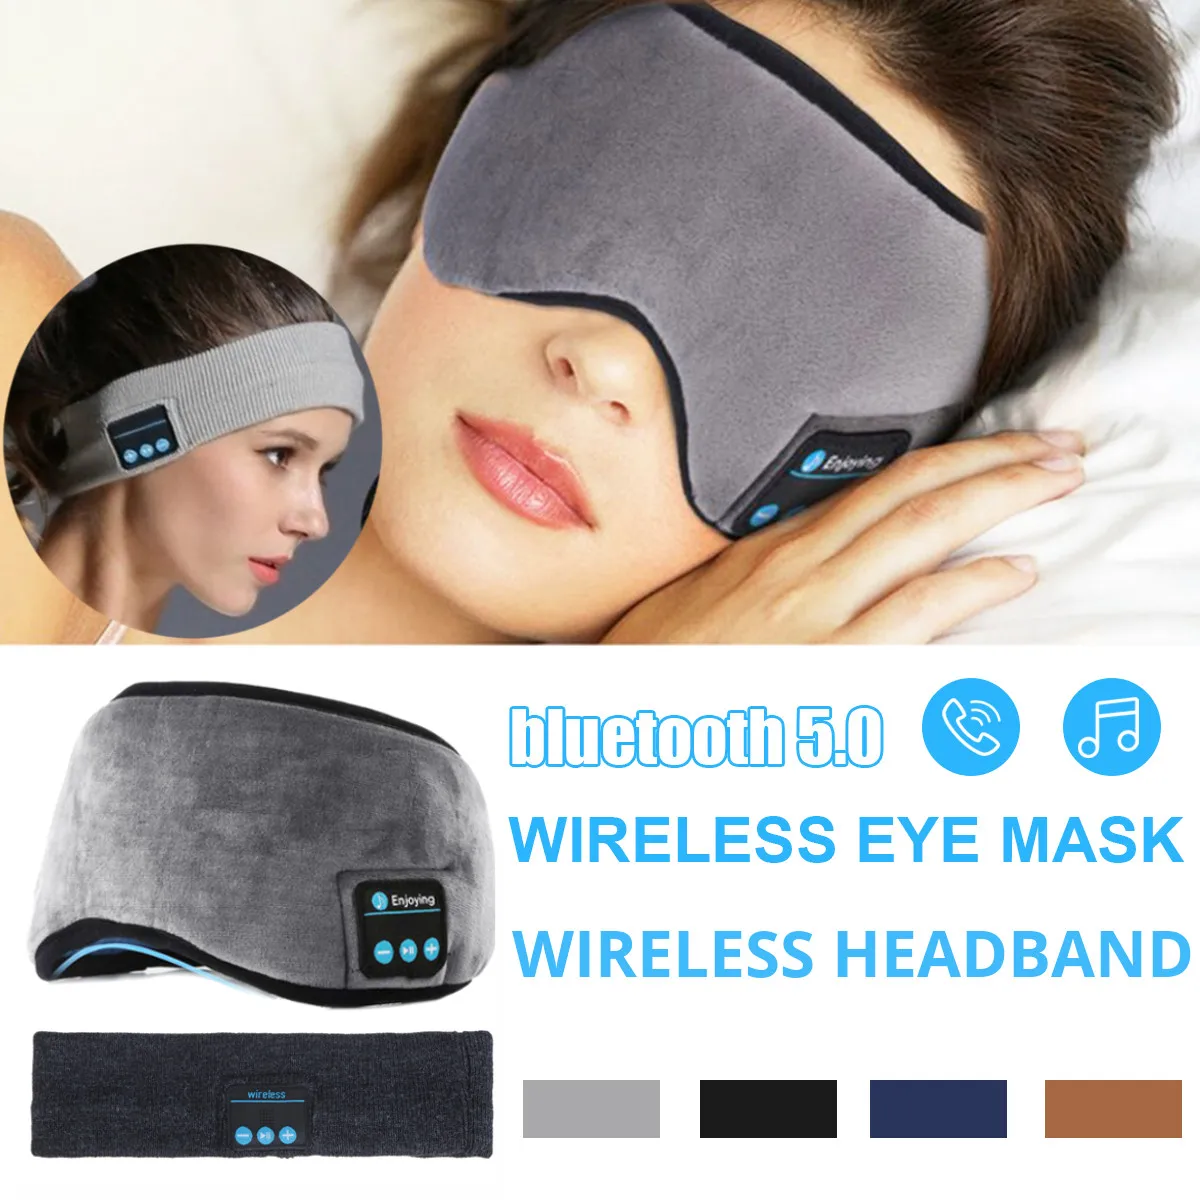 

Wireless bluetooth 5.0 Earphones Sleeping Eye Mask Music player / Sports headband Travel Headset Speakers Built-in Speakers Mic